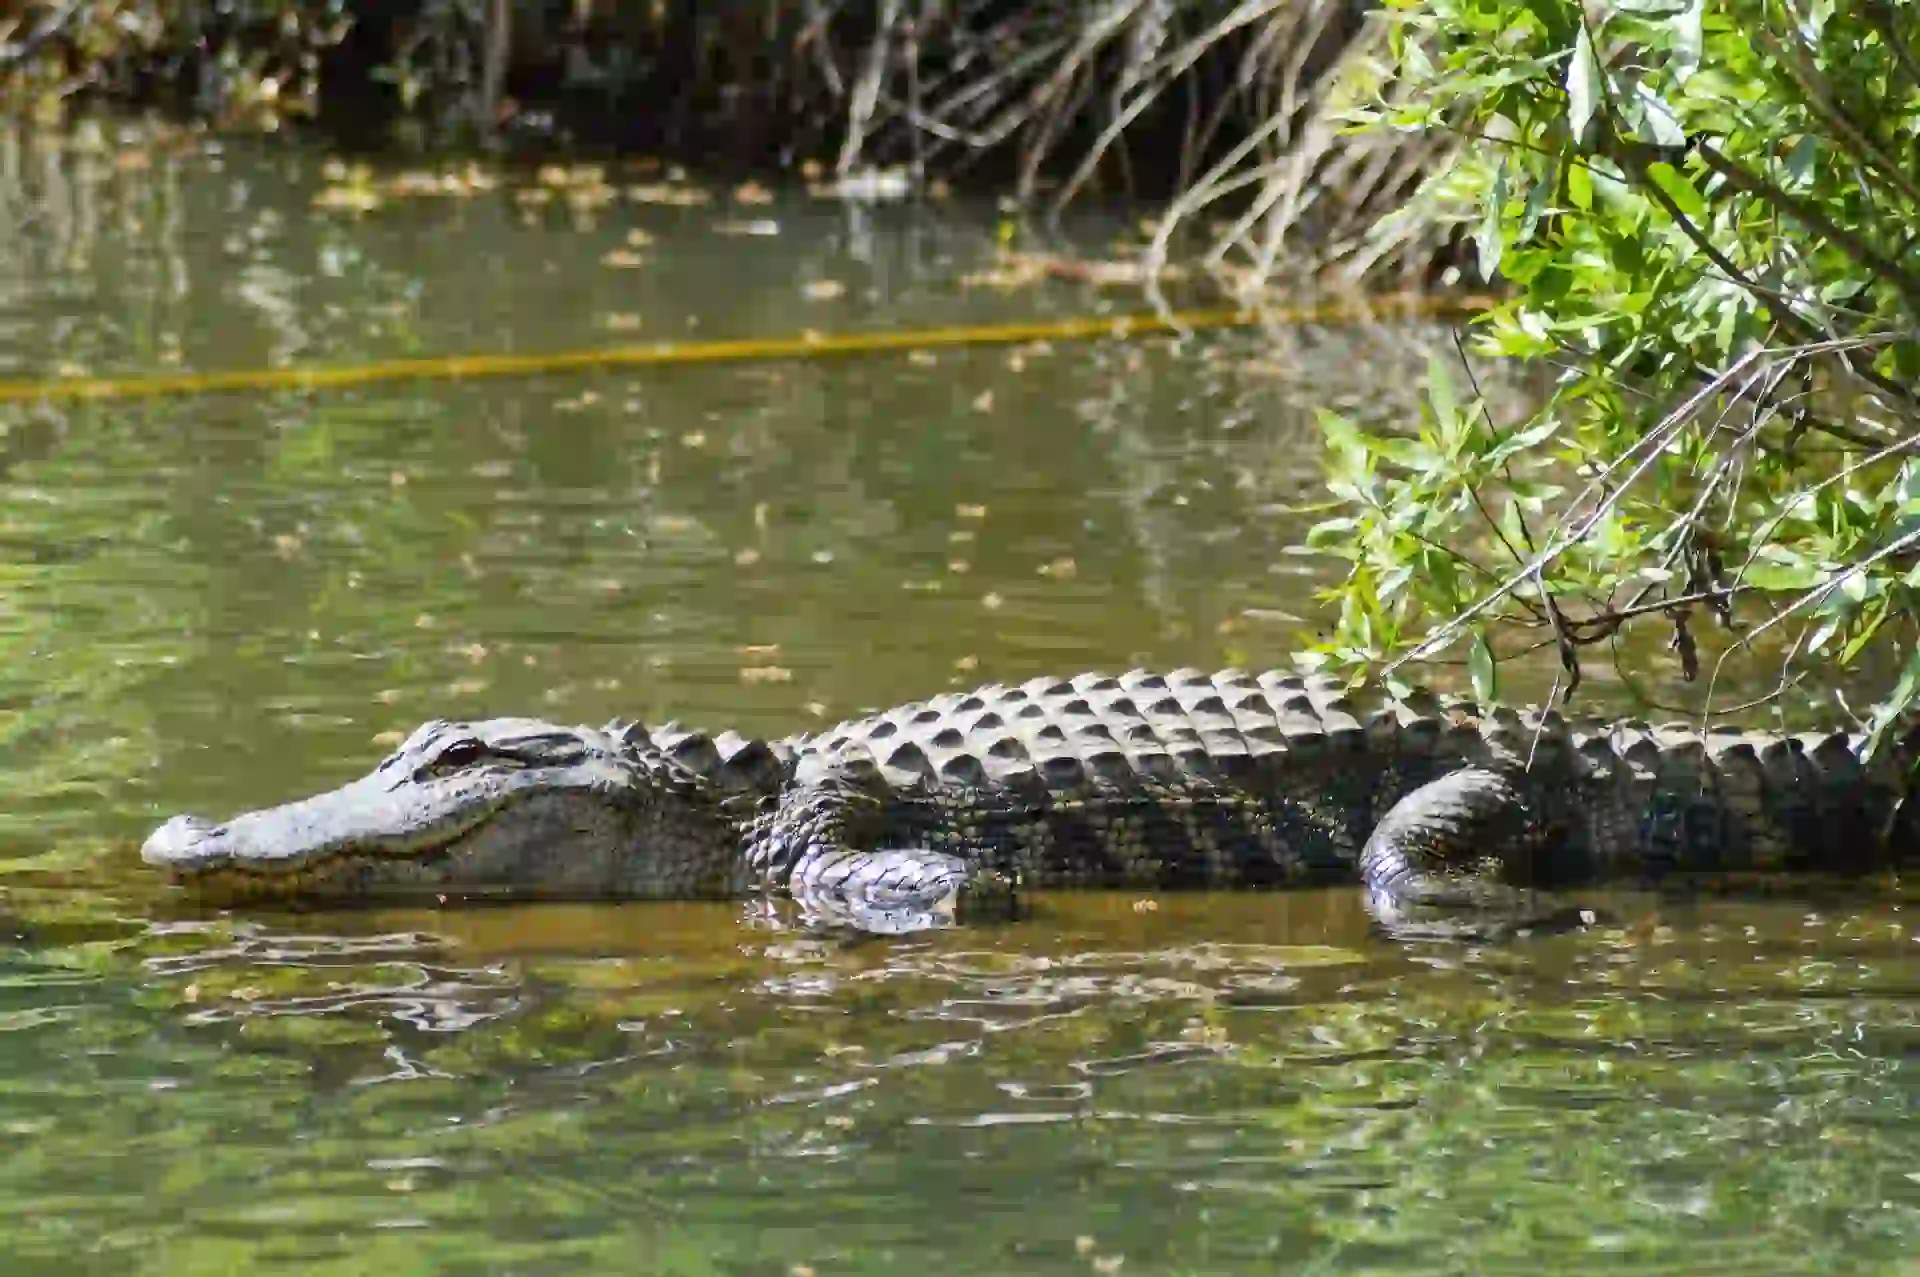 Alligator sunning in water - Are alligators reptiles or amphibians?